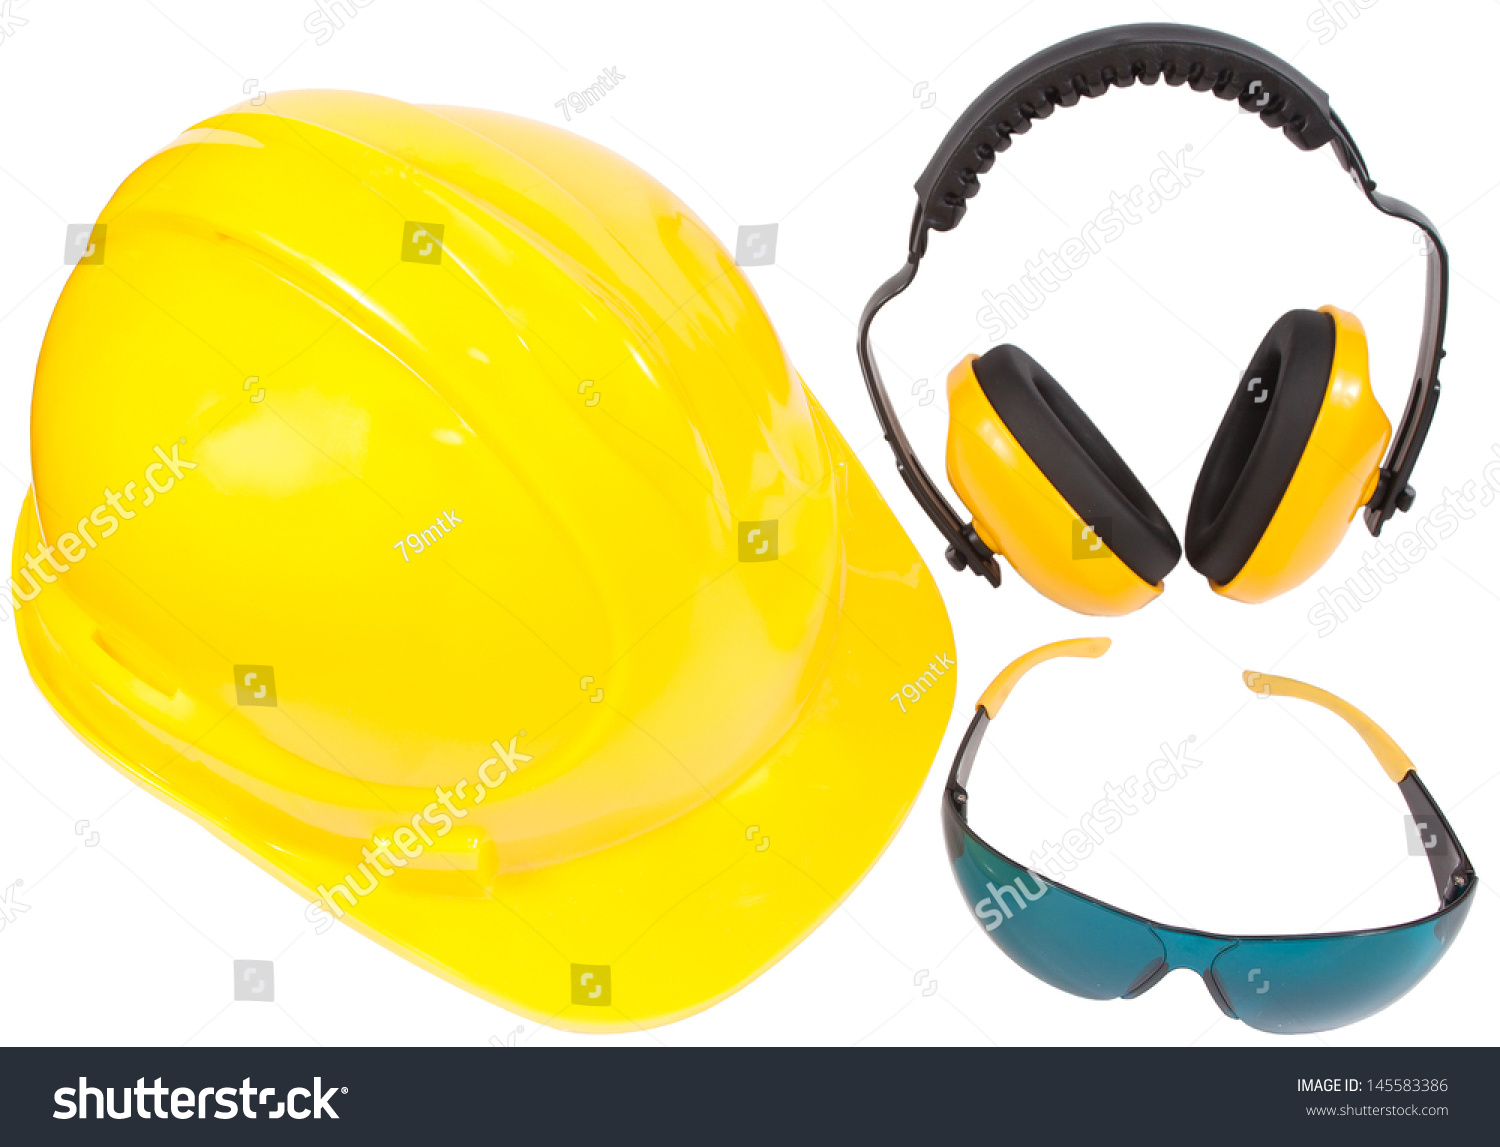 Hearing Protection Ear Muffs Helmet Eyewear Stock Photo Edit Now 145583386